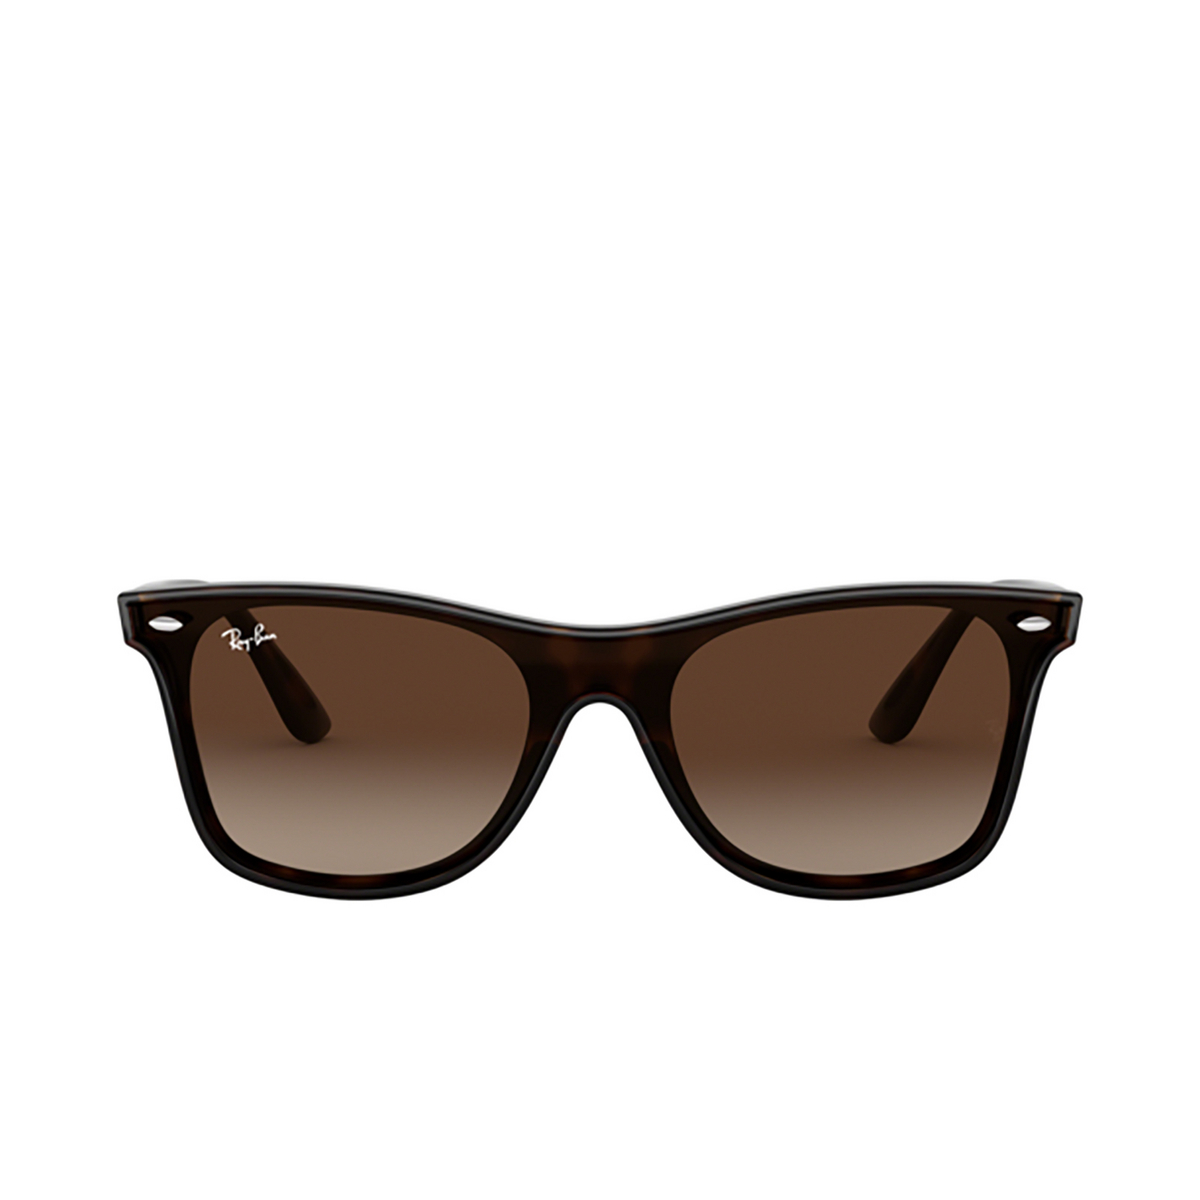 Ray-Ban BLAZE WAYFARER Sunglasses 710/13 Light Havana - front view